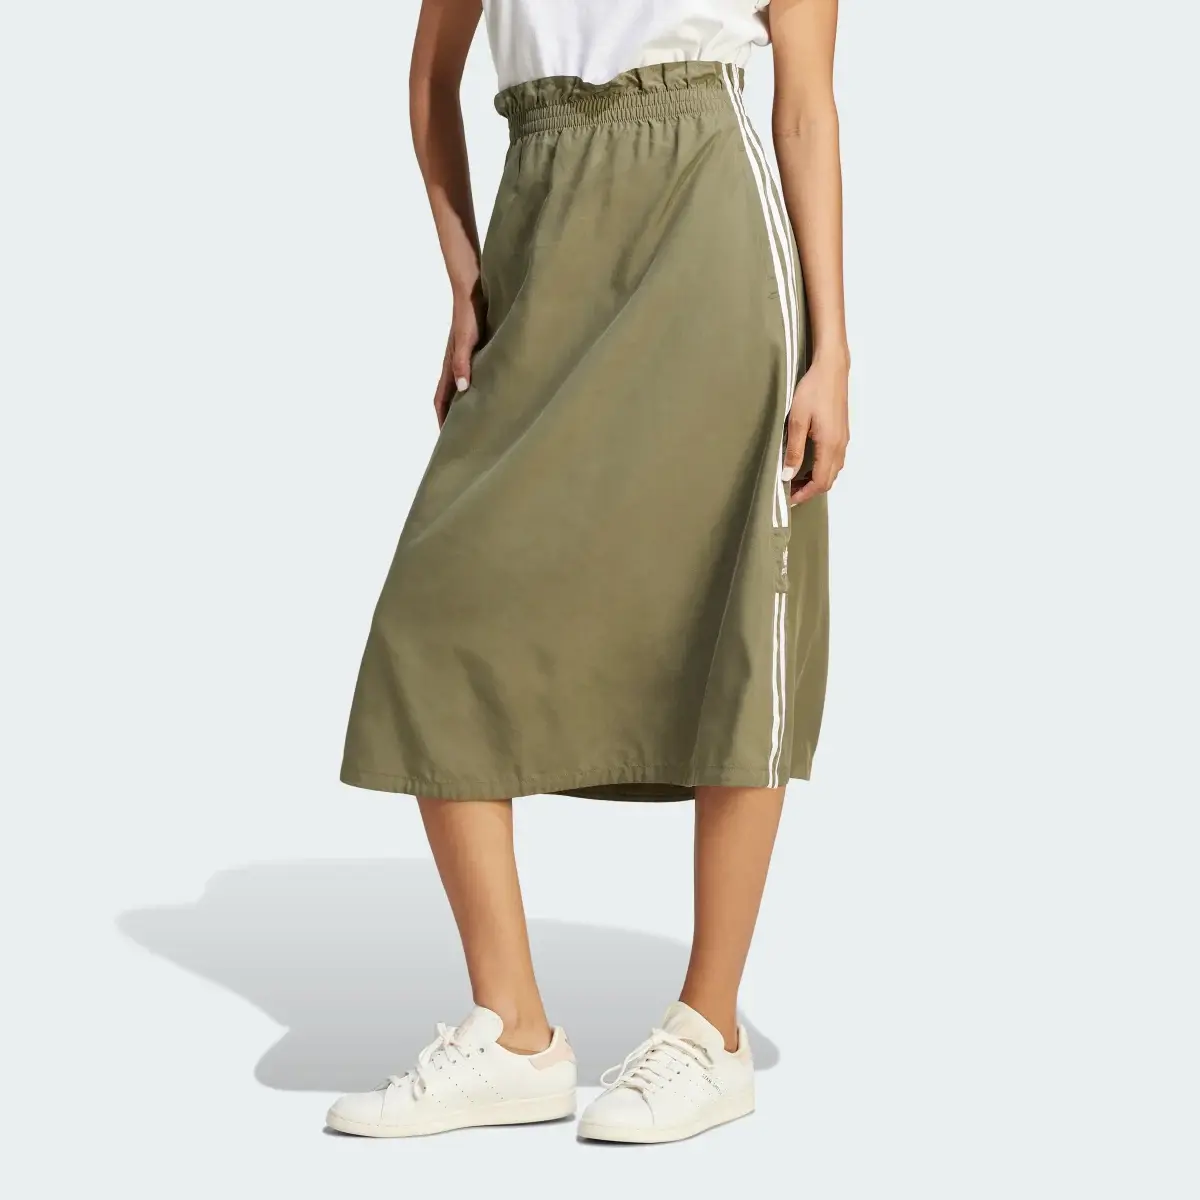 Adidas Parley Skirt. 1